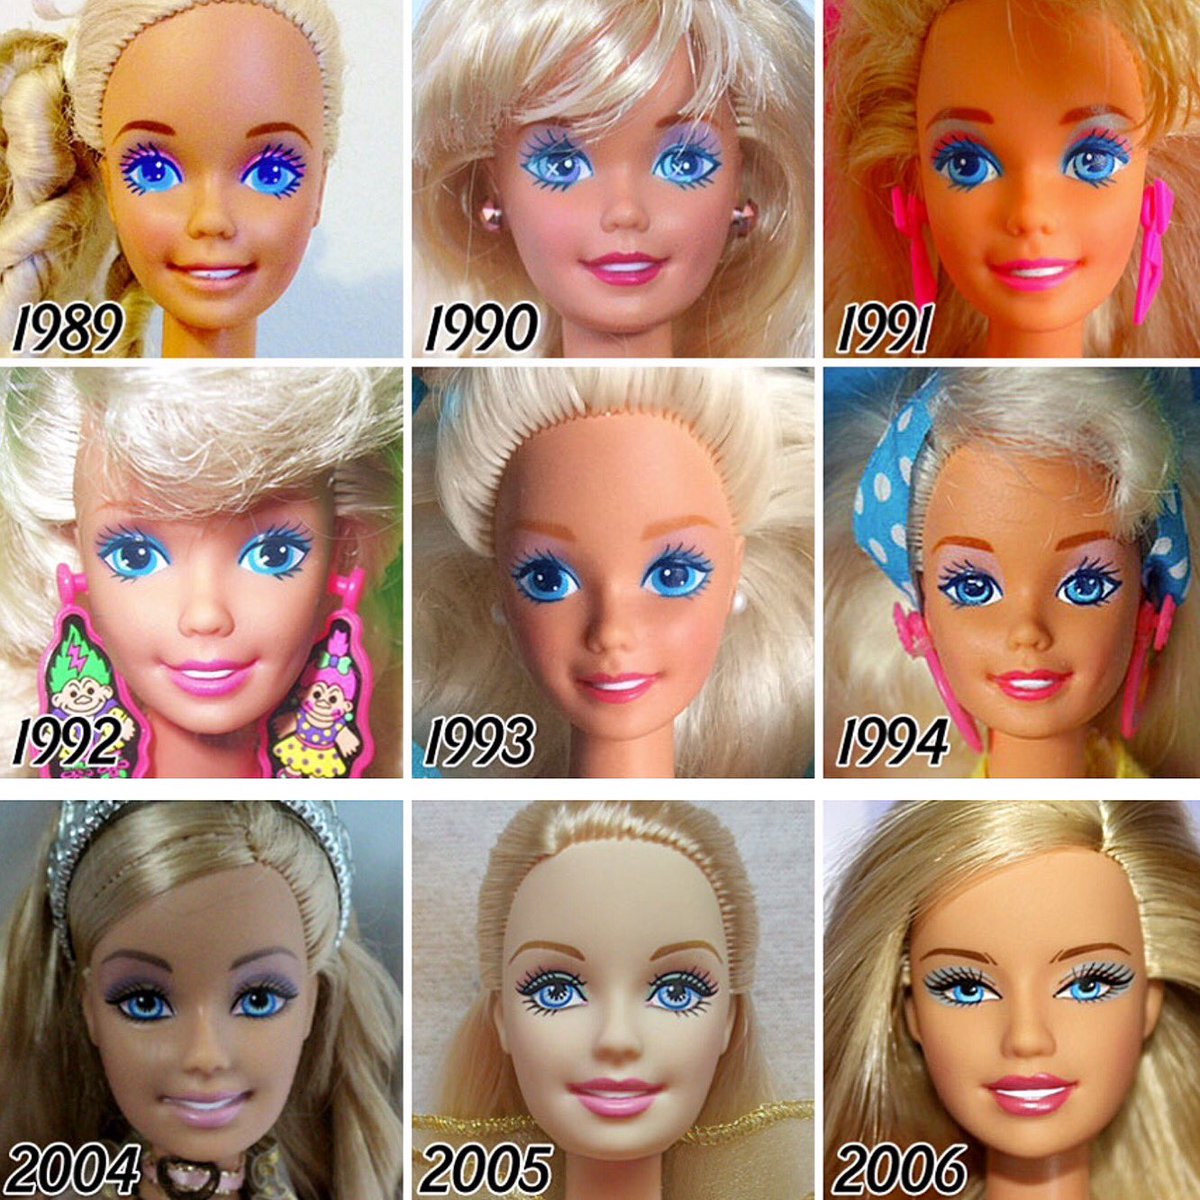 større Hysterisk angivet robertachiarella.com on Twitter: "Who's your favorite? Evolution of Barbie # barbie #faces #dreamdoll #Barbie doll #1959 #great jobTenaflyviper  https://t.co/4kOu1yDK08" / Twitter